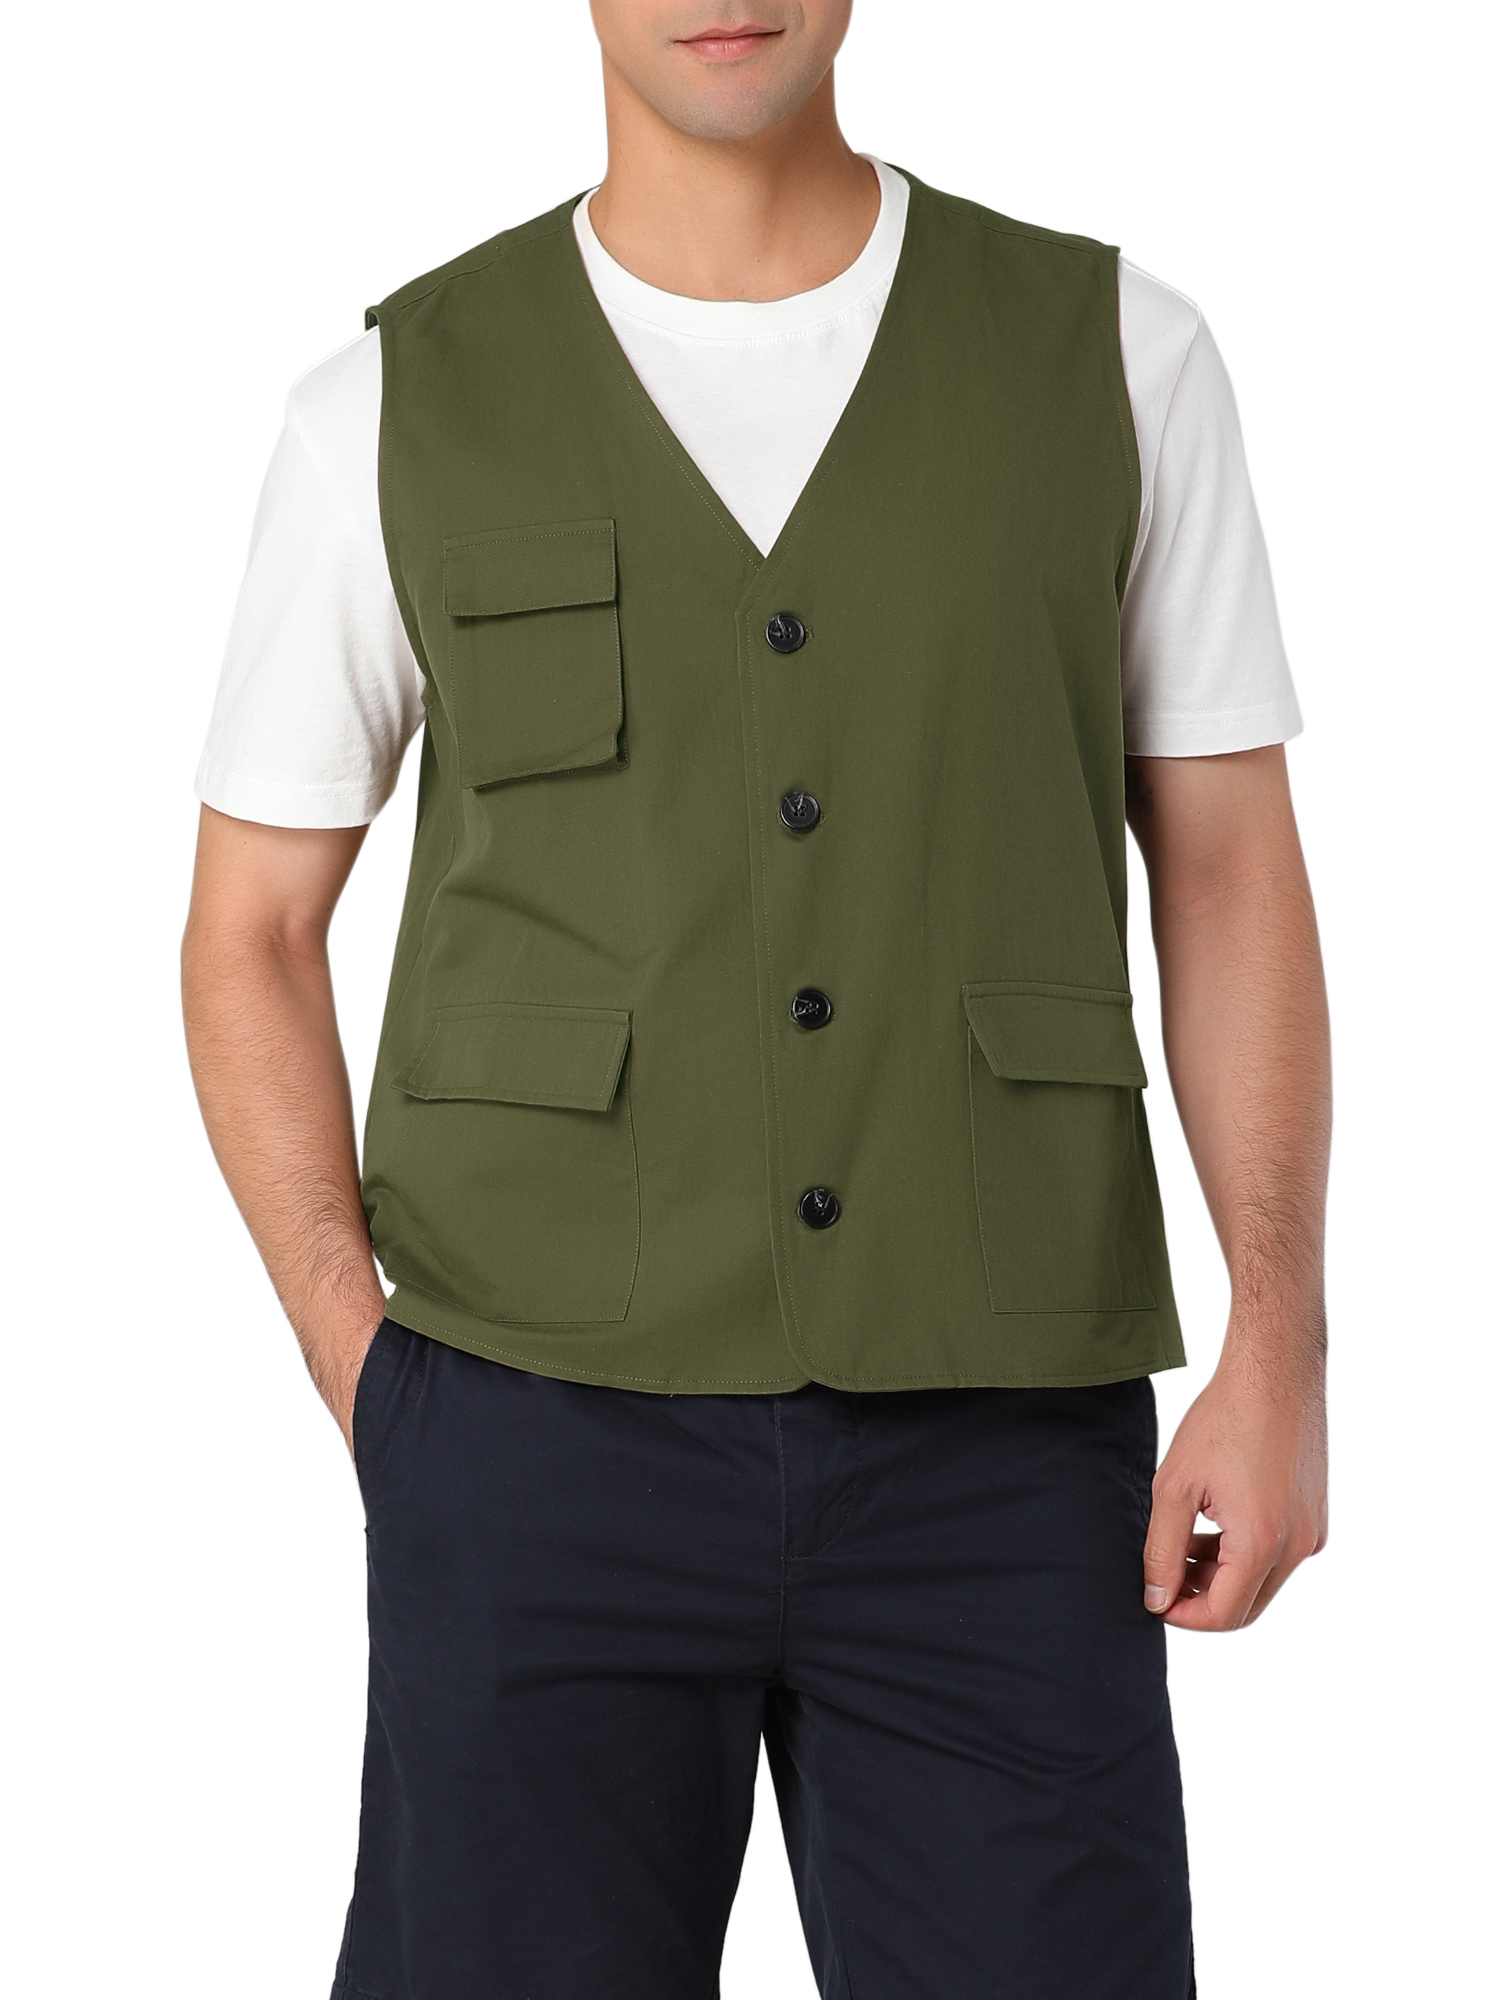 MODA NOVA Big & Tall Men's Waistcoats Casual Cotton Sleeveless Pockets Button Down V Neck Cargo Vests Green LT - image 1 of 5